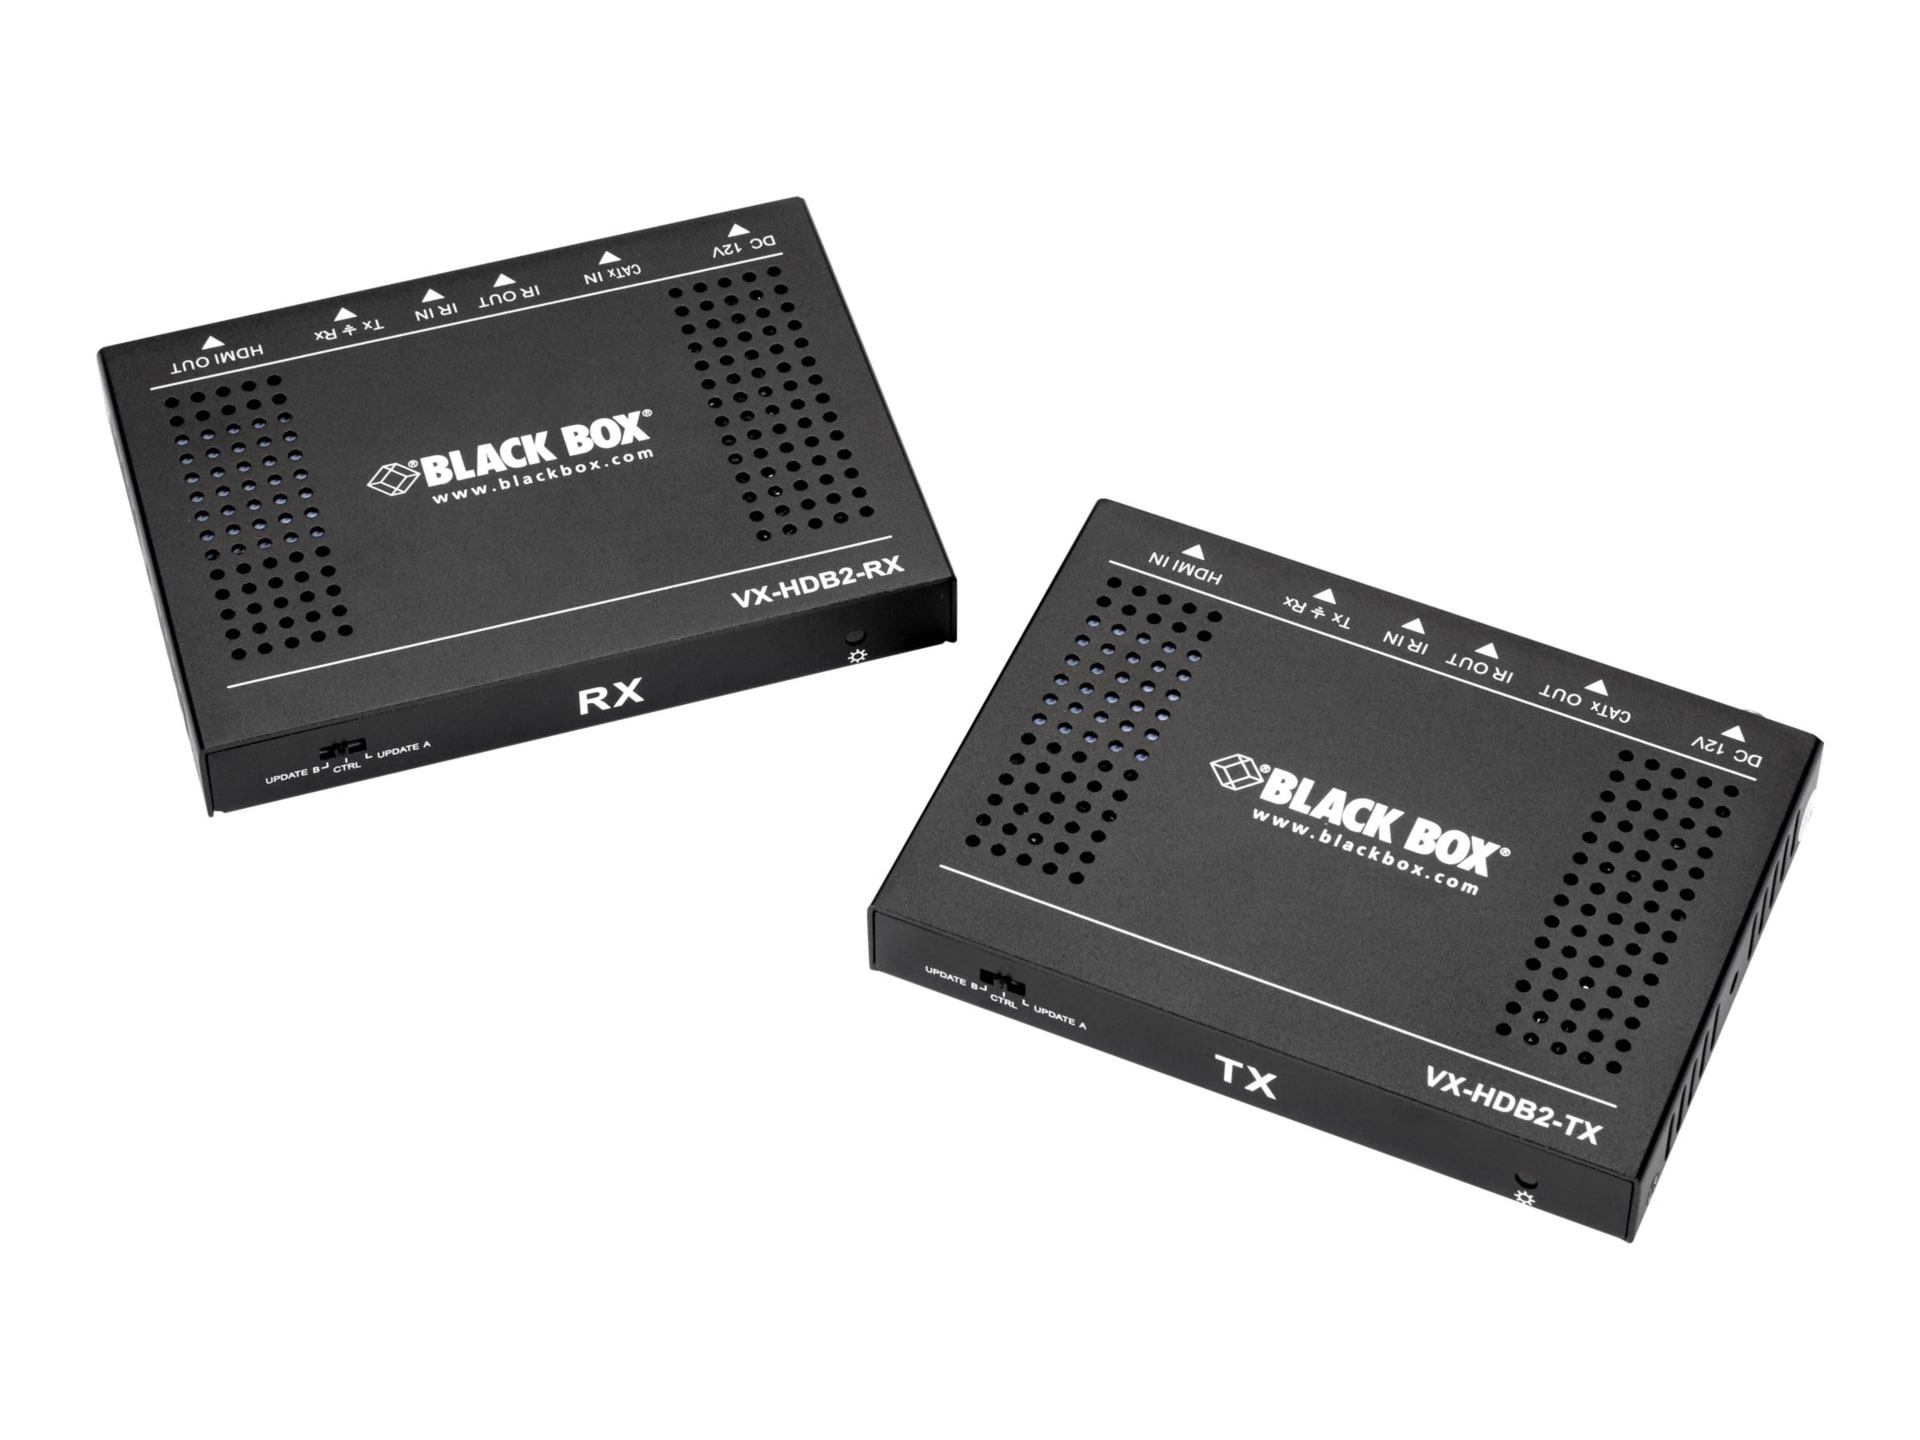 Black Box Receiver & Transmitter - video/audio extender